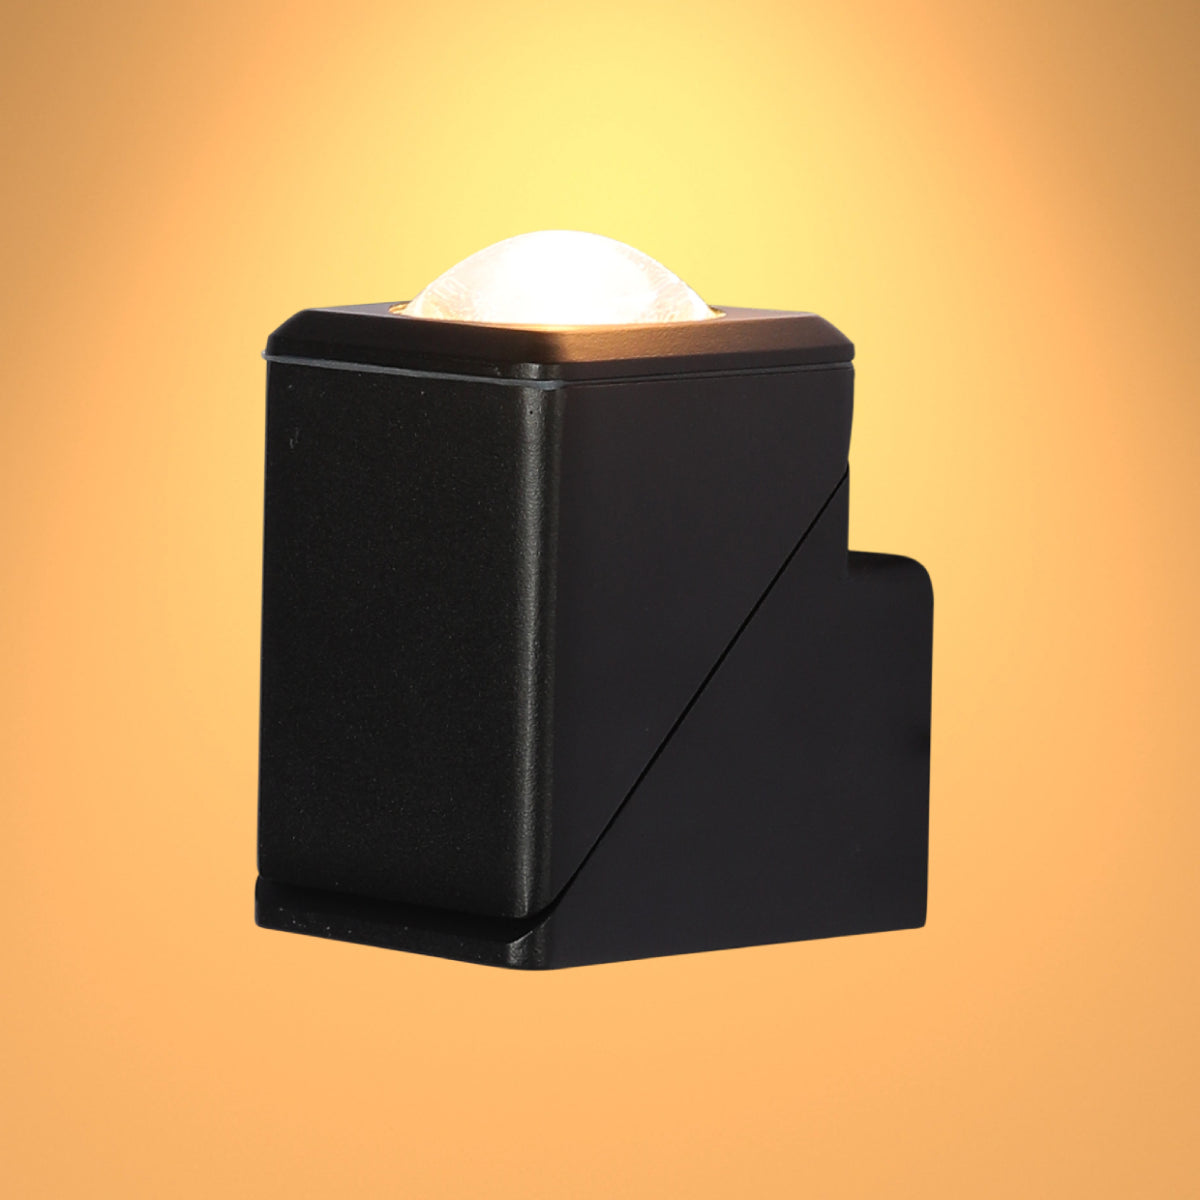 Main image of Rotatable Cubes Outdoor LED Wall Light Black 3000K Narrow Beam 182-03419